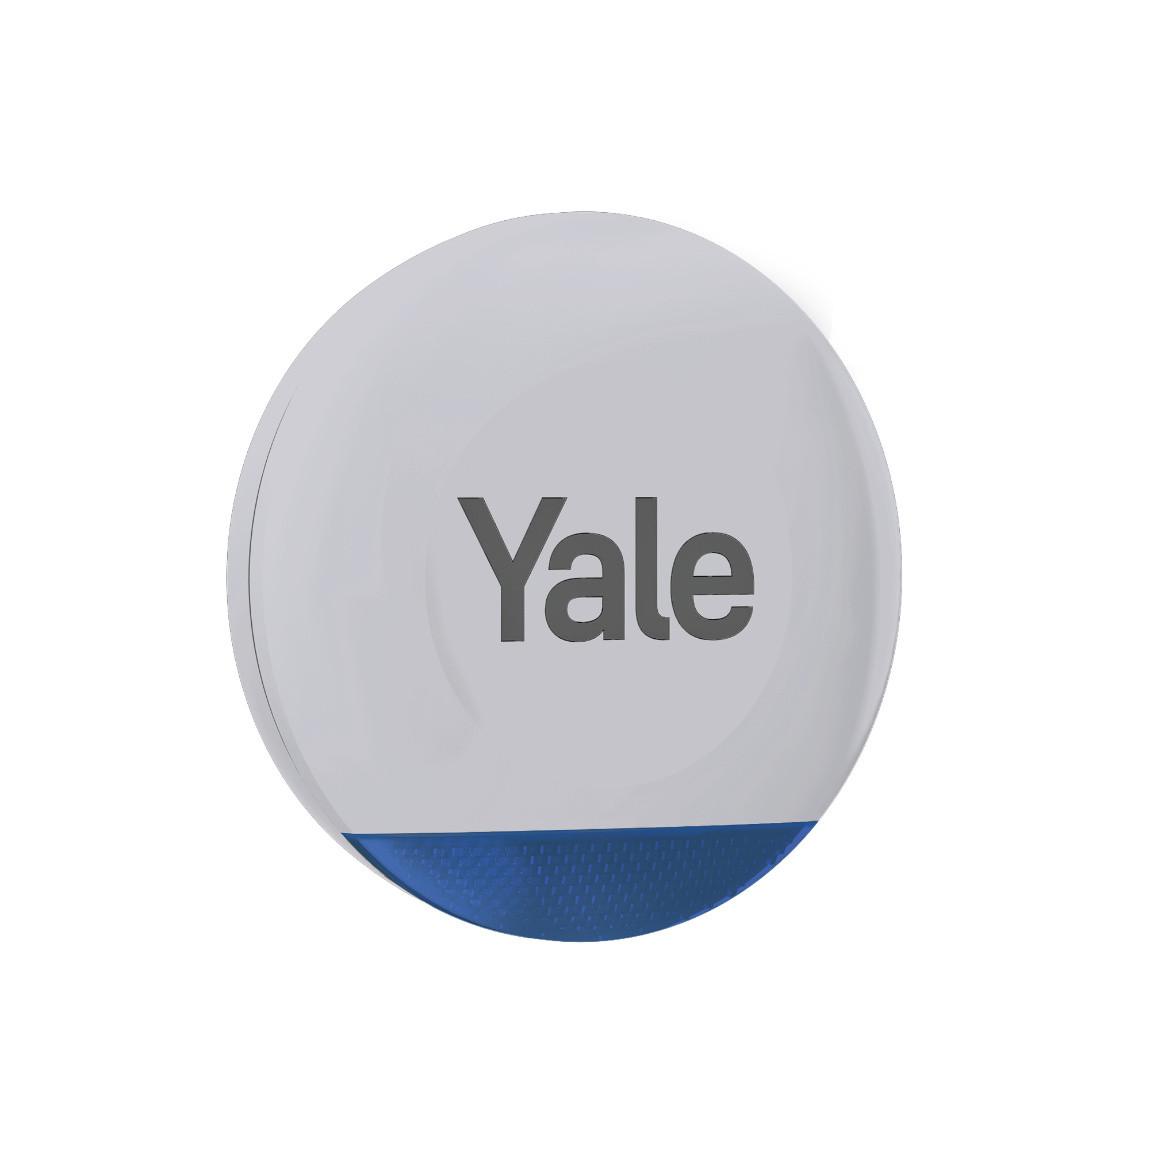 Yale Smart Alarm Outdoor Siren - Smarte Außensirene